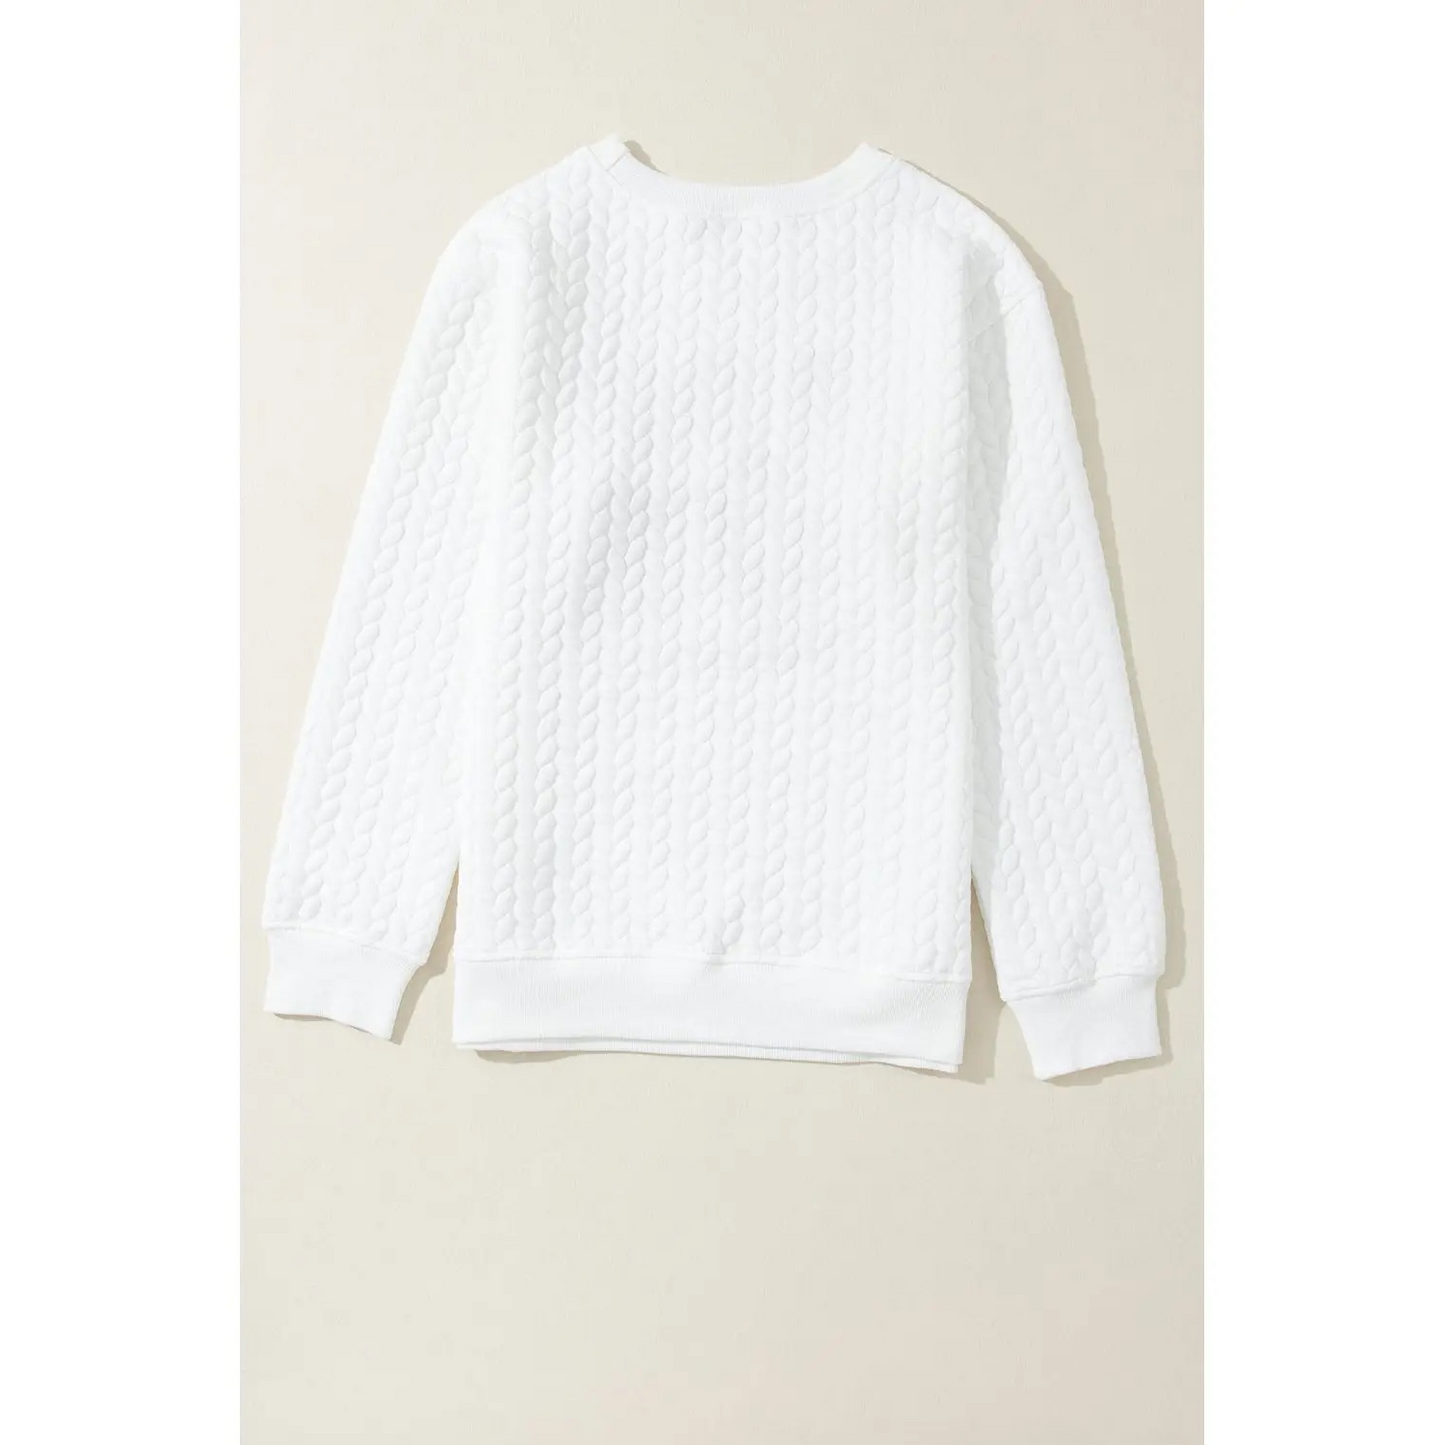 XOXO White Sweatshirt